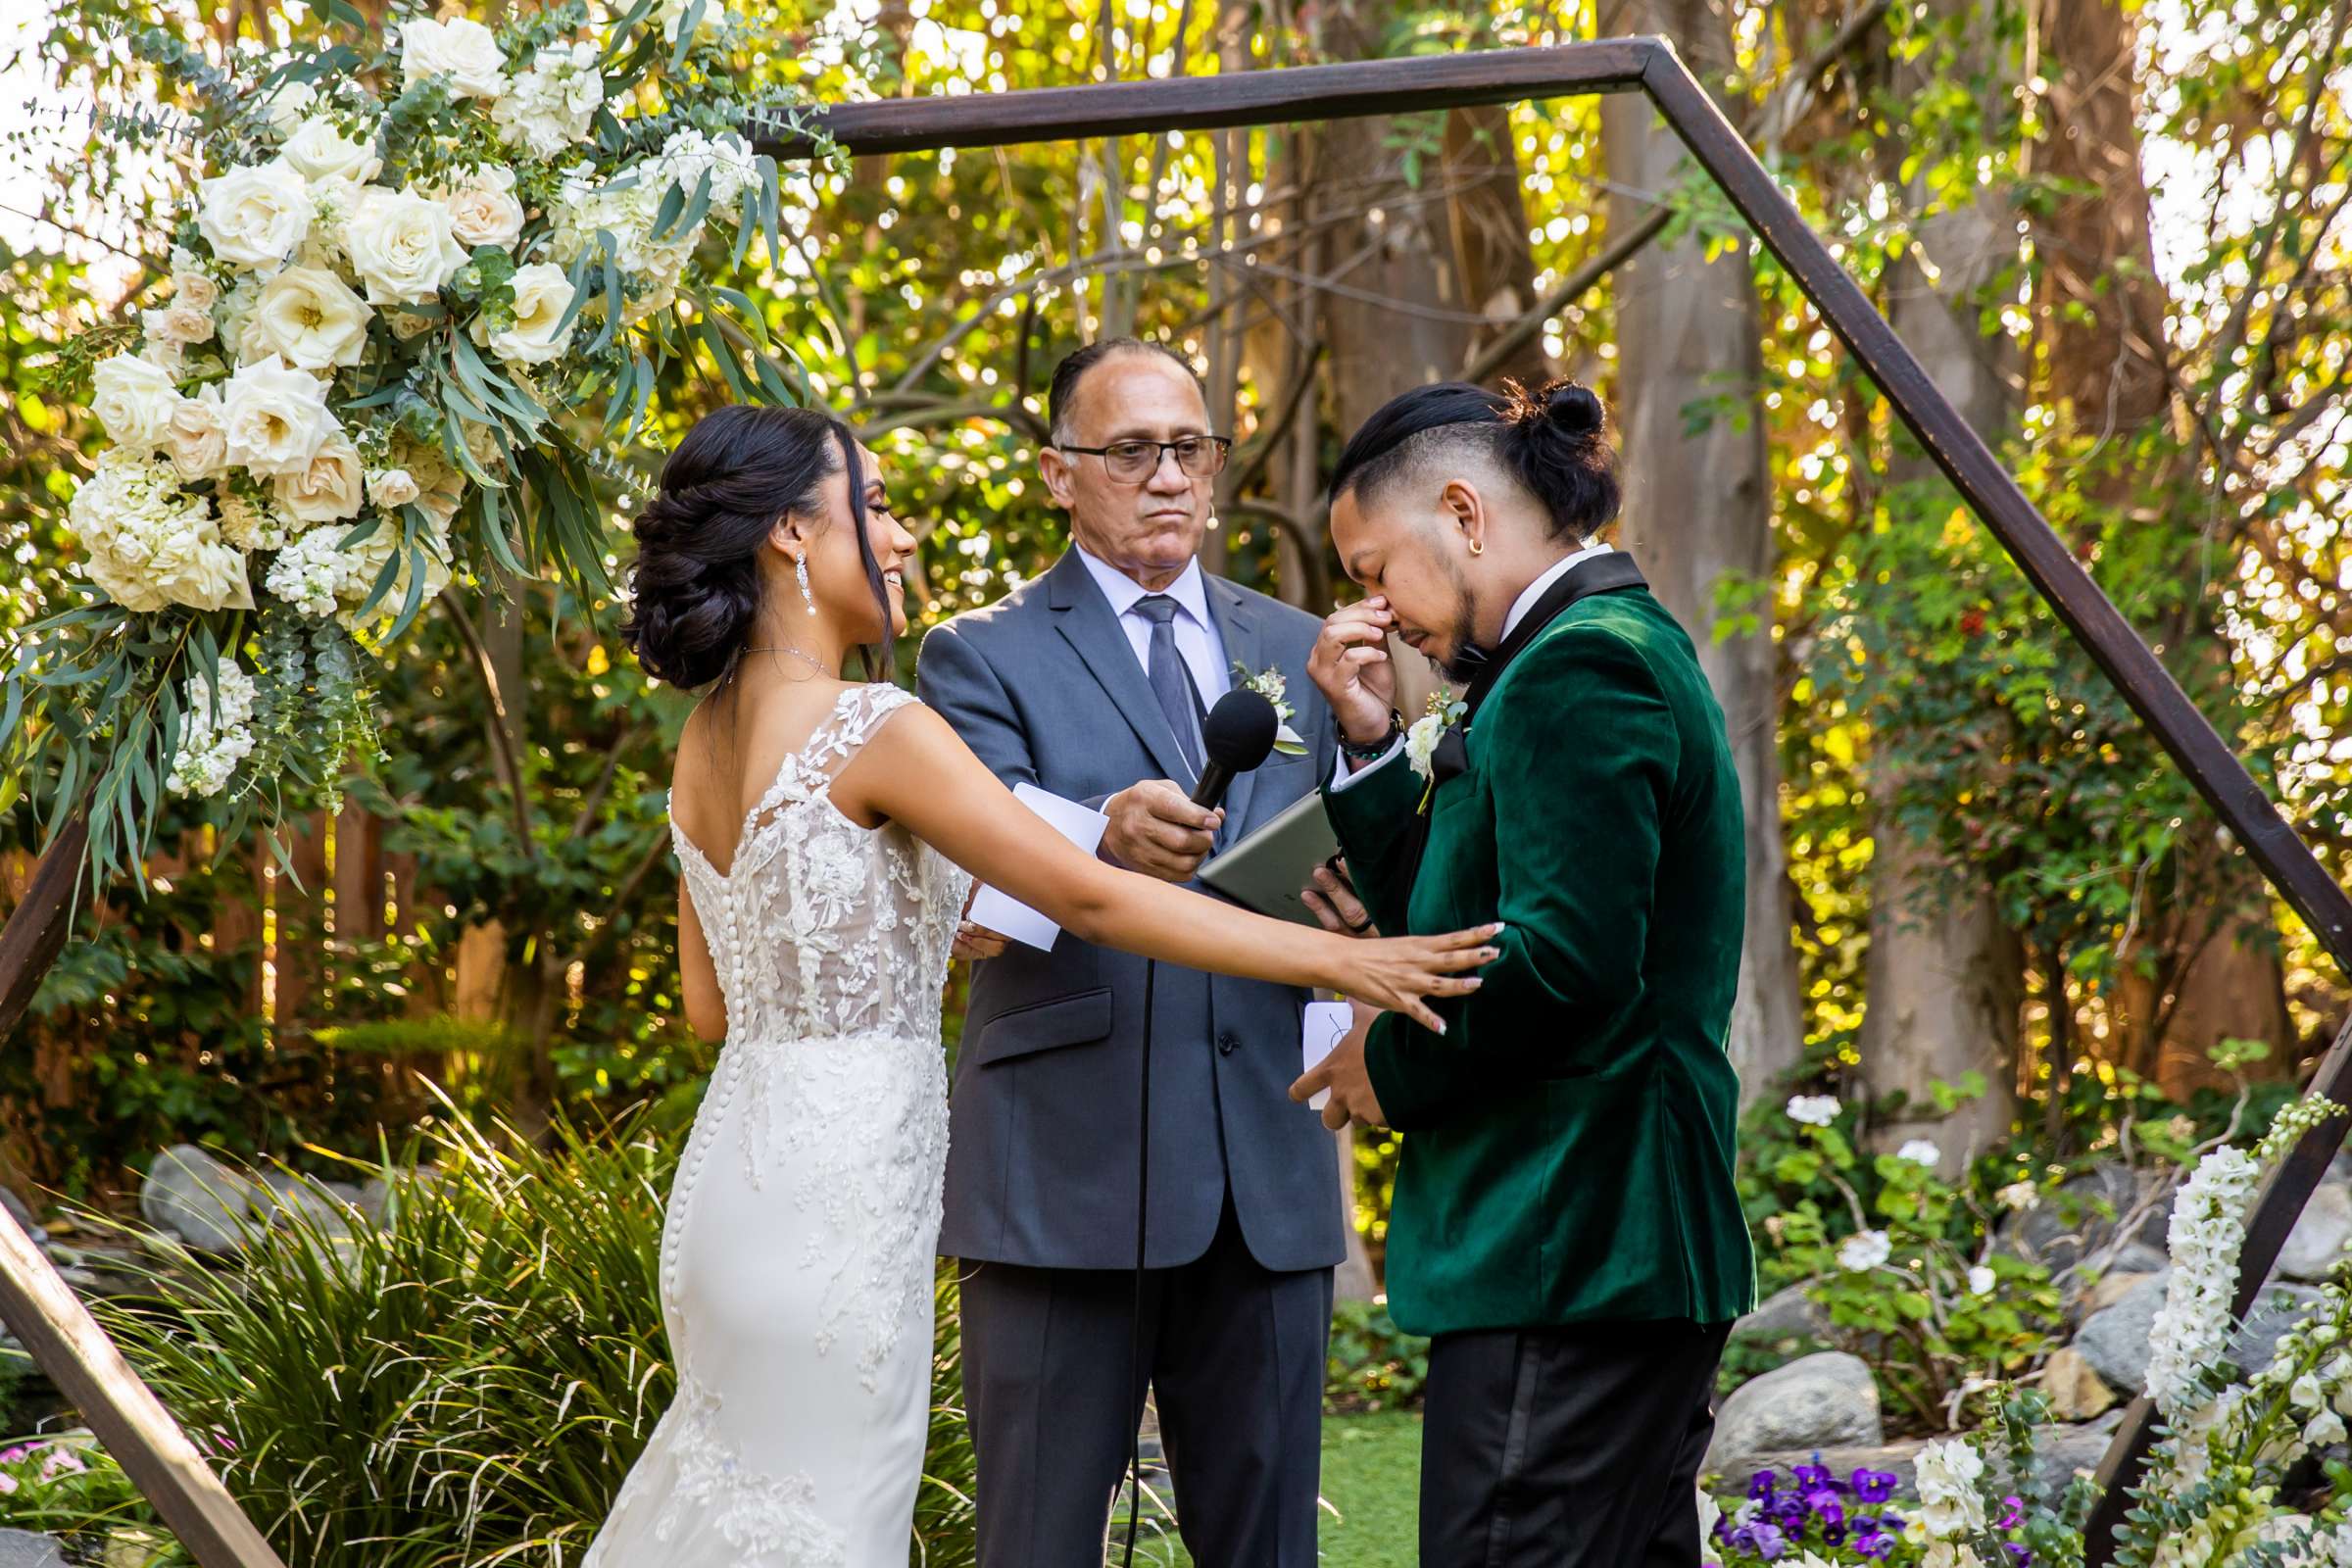 Twin Oaks House & Gardens Wedding Estate Wedding, Lottiesha and Christian Wedding Photo #8 by True Photography